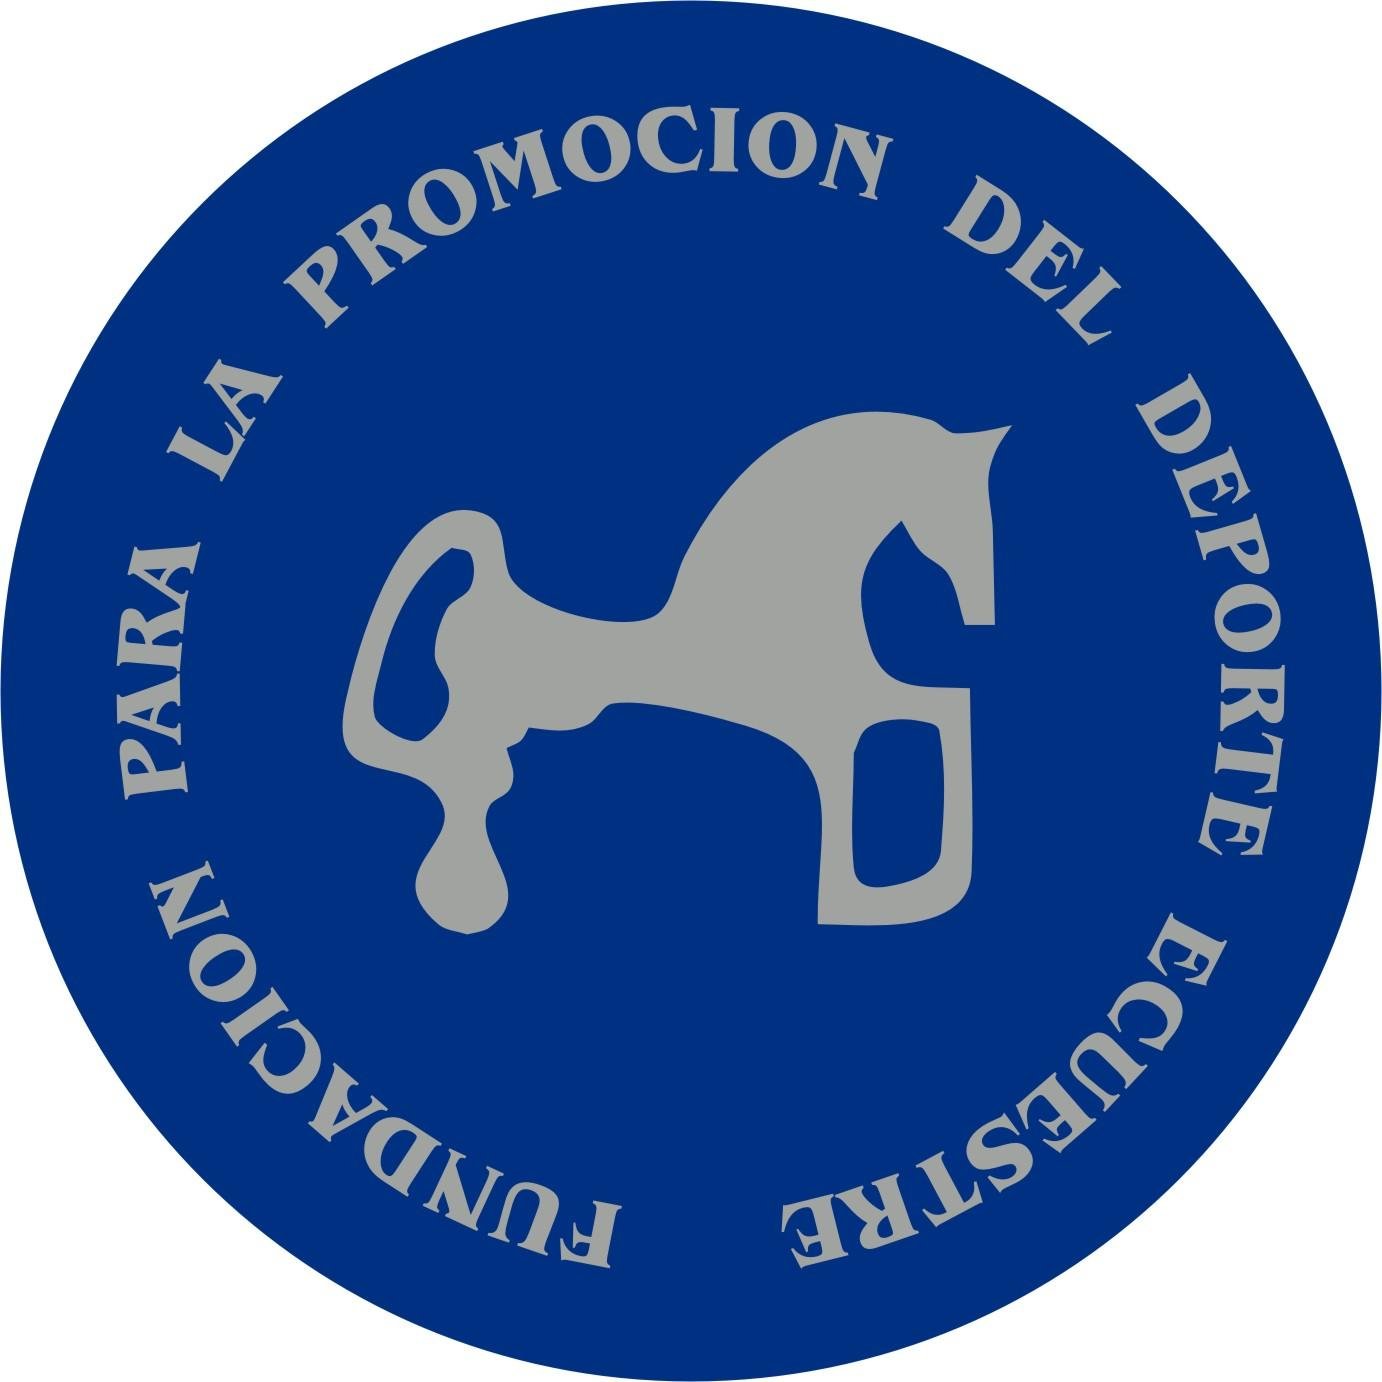 Organización sin fines lucrativos dedicada a la promoción de actividades de #equitación. Síguenos también en http://t.co/ZM3eP8a22D